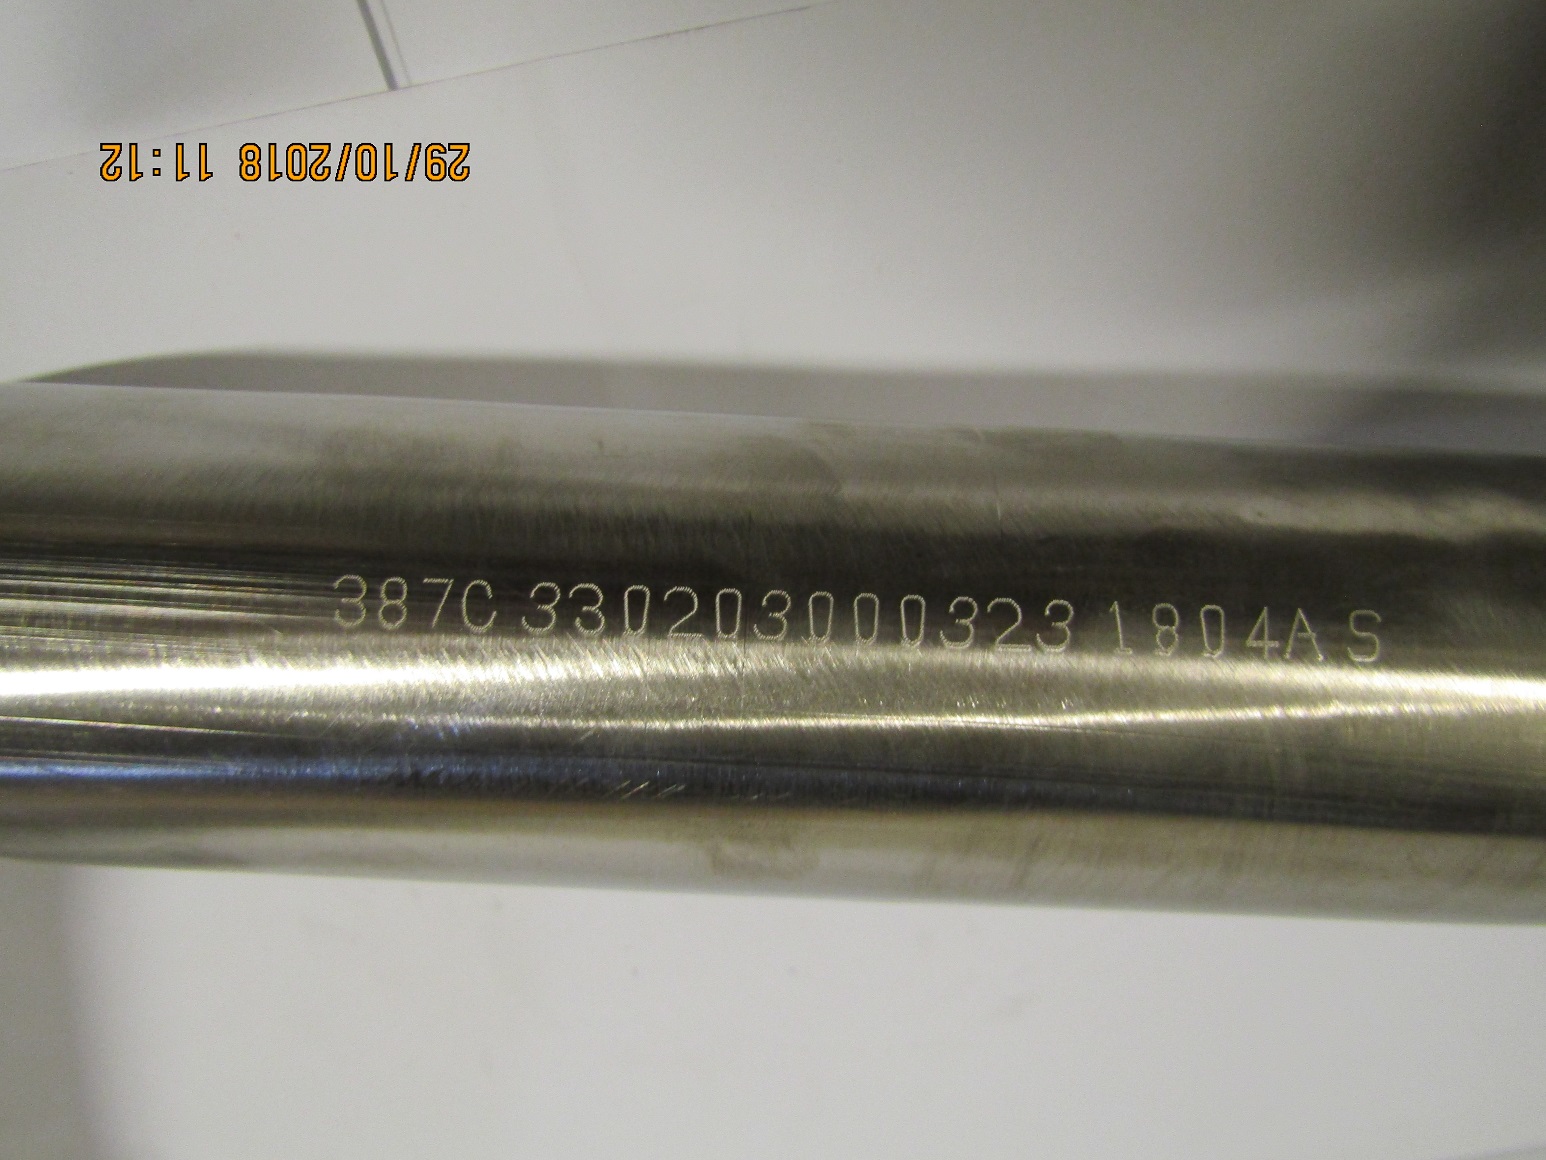 Патрубок радиатора металлический  6M26G500 /Water-outlet Pipe Set (330203000323)